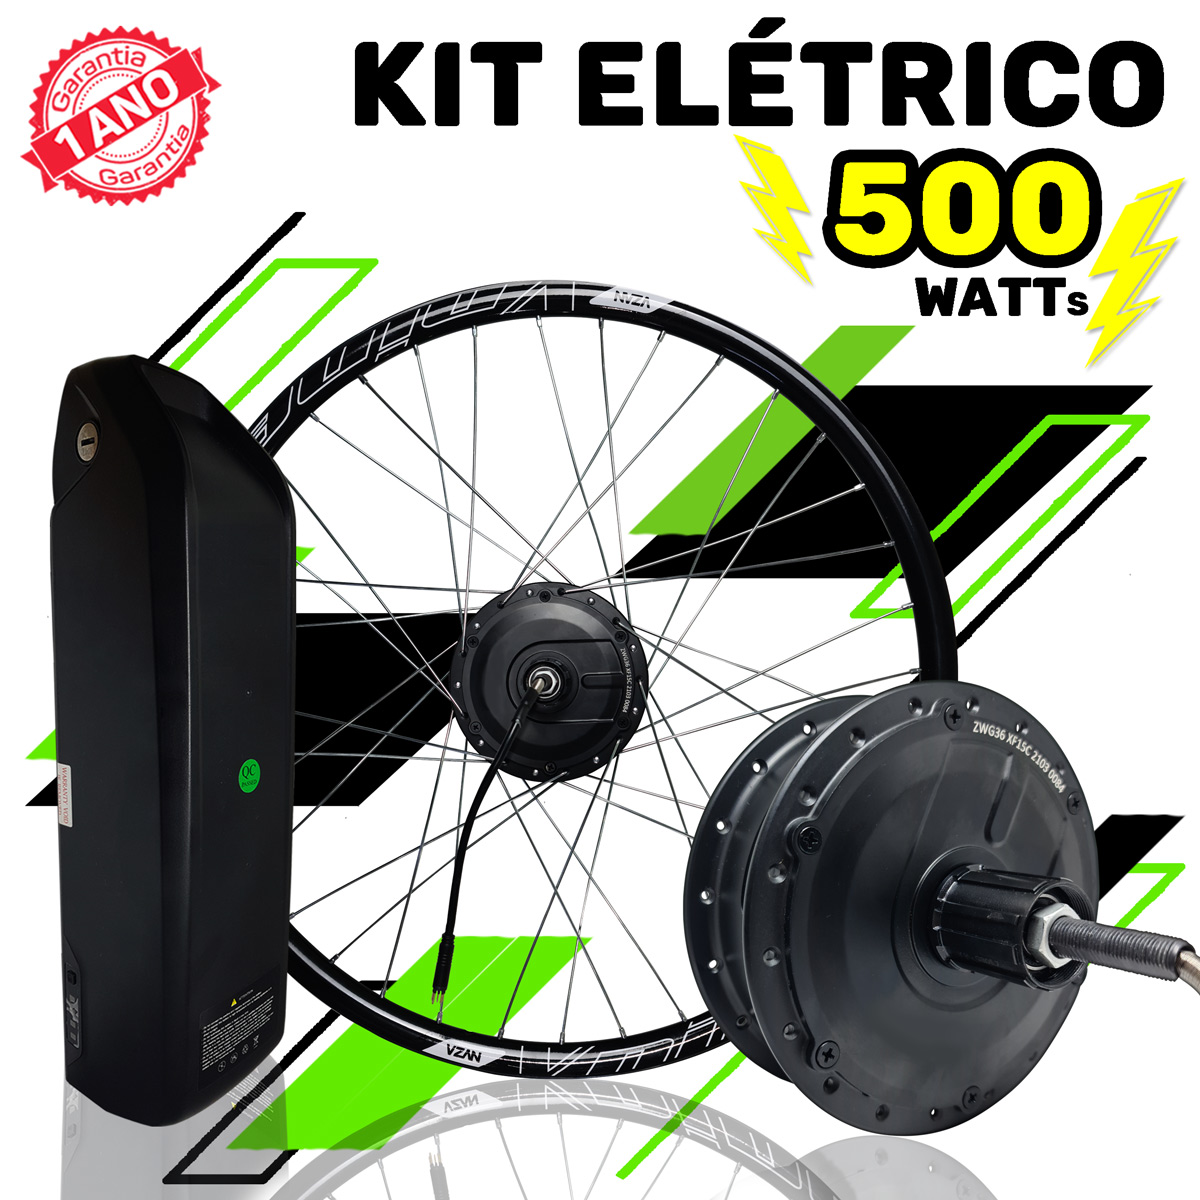 Kit Elétrico para Bicicleta - TecBike - 500 Watts 36V - Aro 29